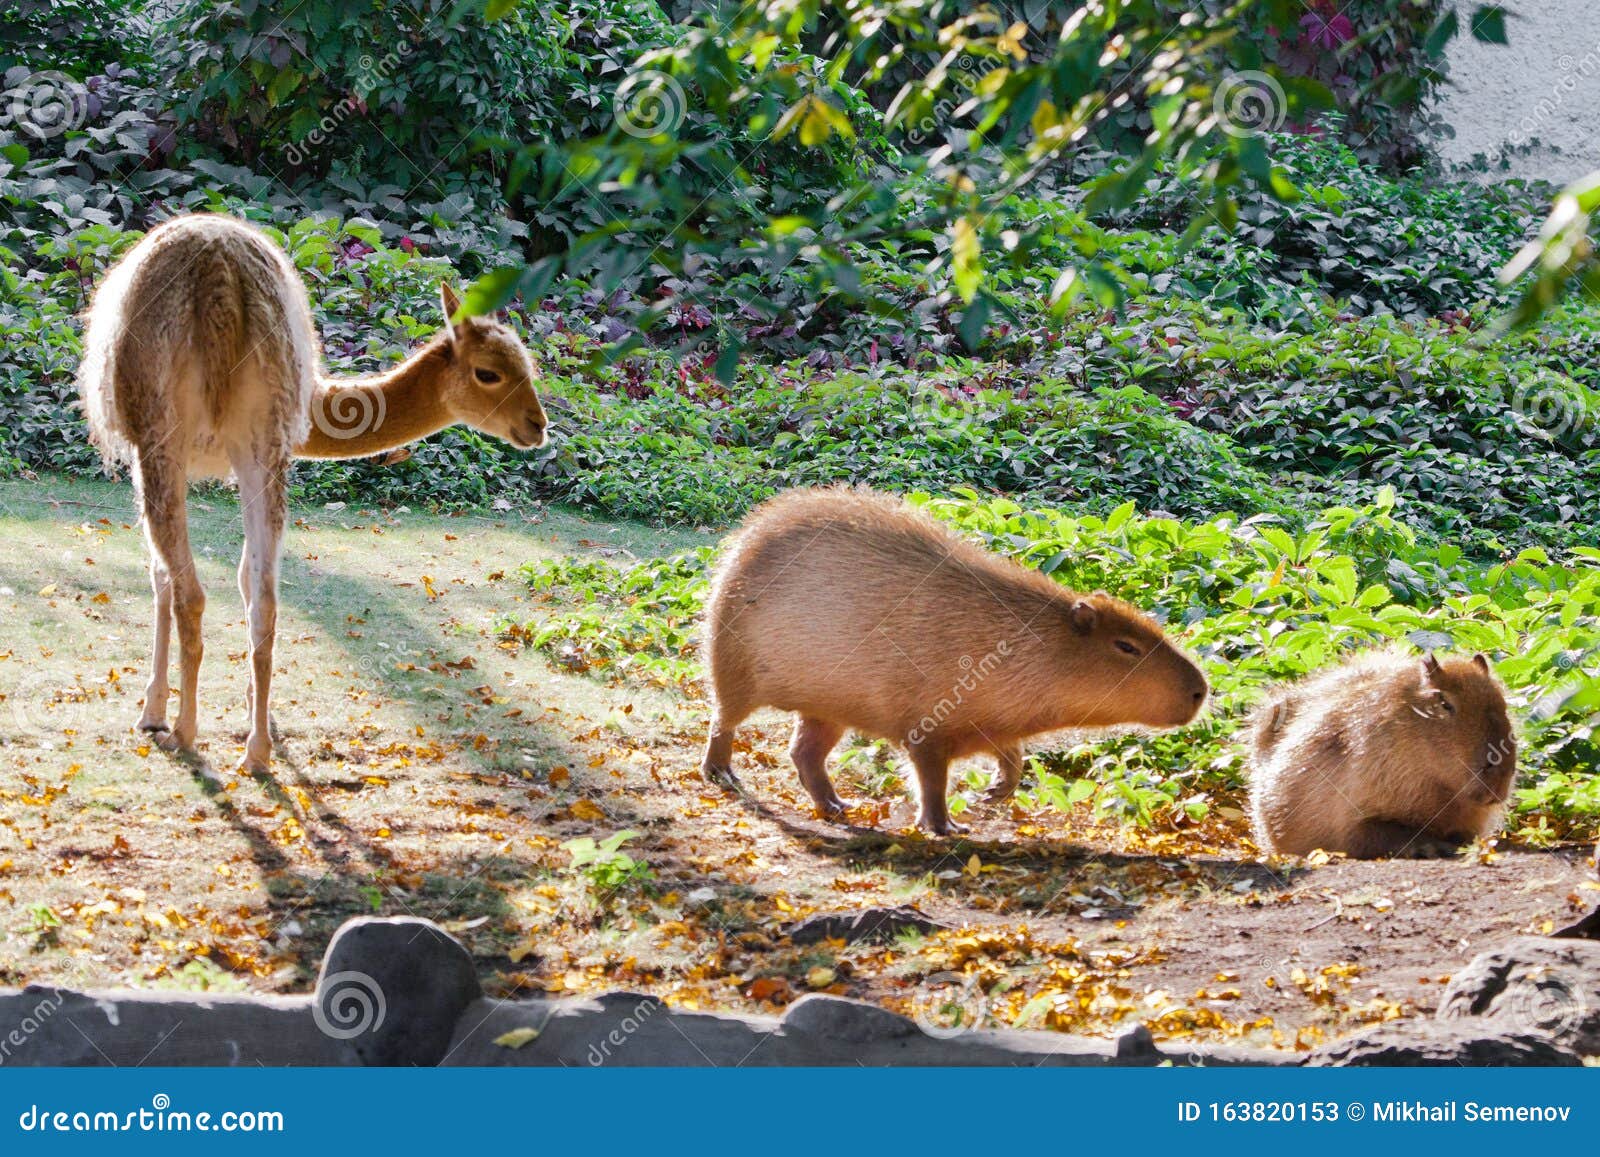 Llama and Capybara - Animal Symbols of South and Latin America Graze  Peacefully on a Green Lawn Stock Image - Image of alpaca, amazon: 163820153